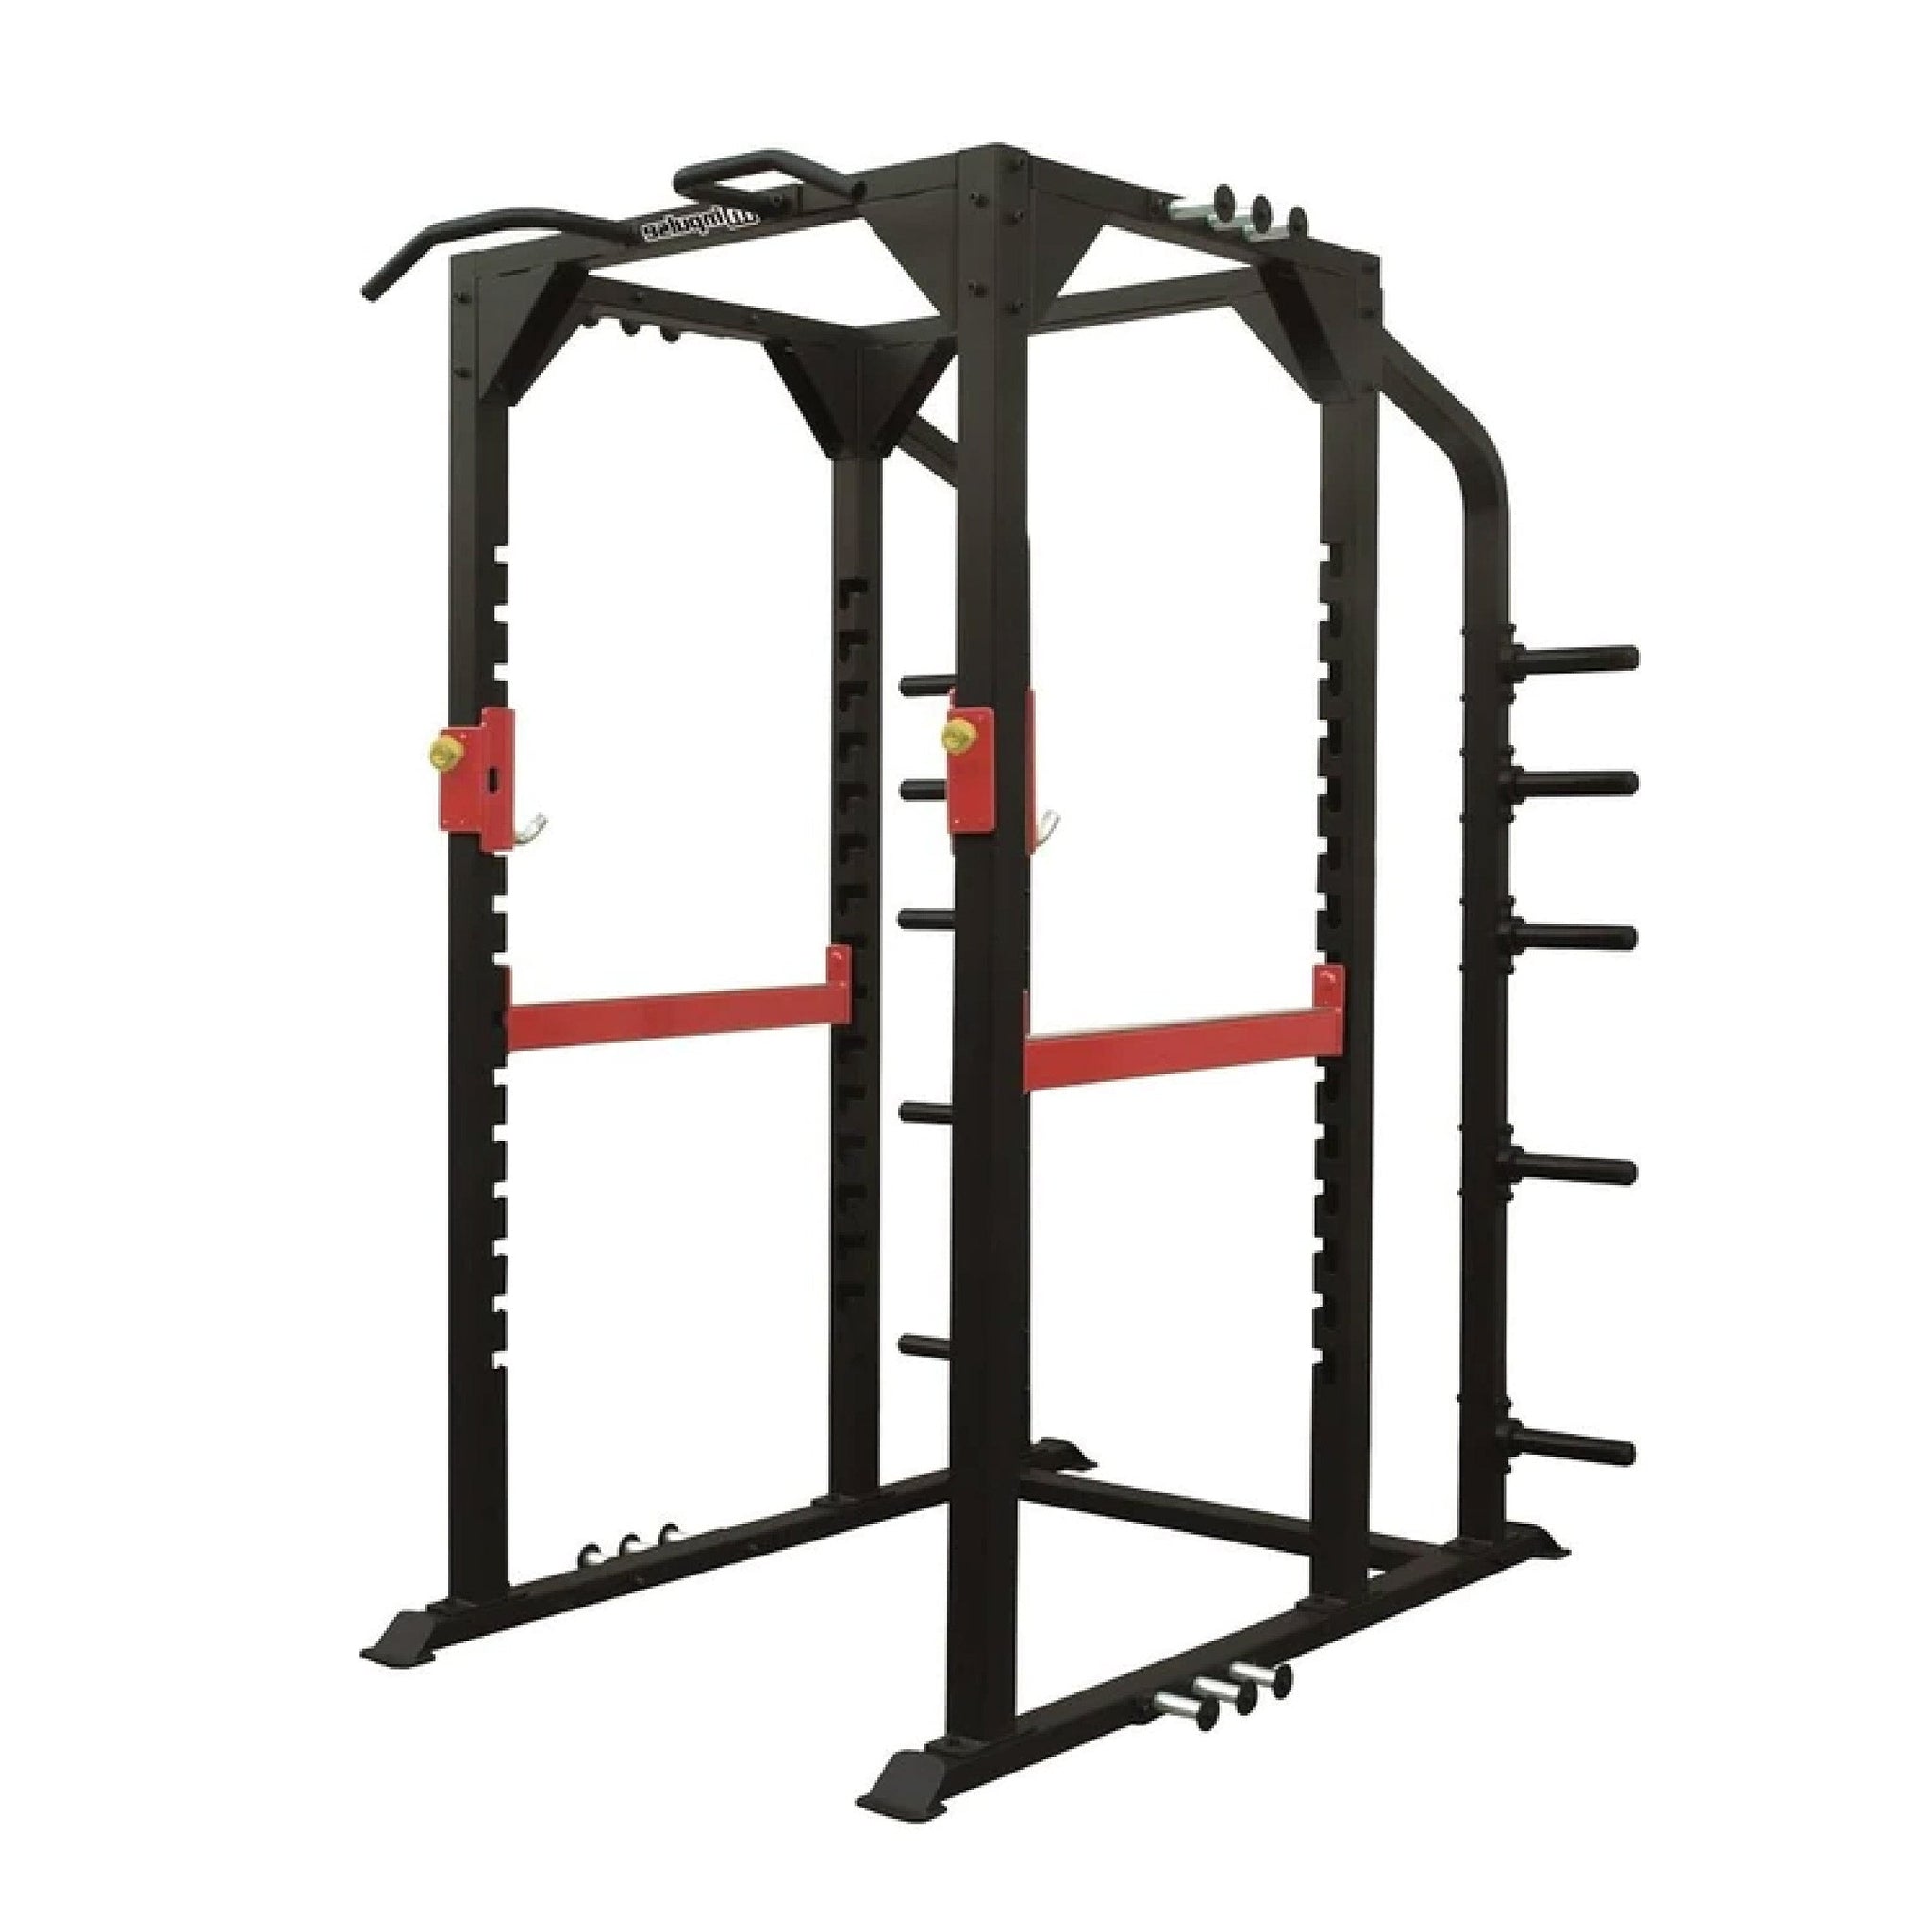 Progression 380 Full Power Rack-Weight Lifting Rack-Progression Fitness-1